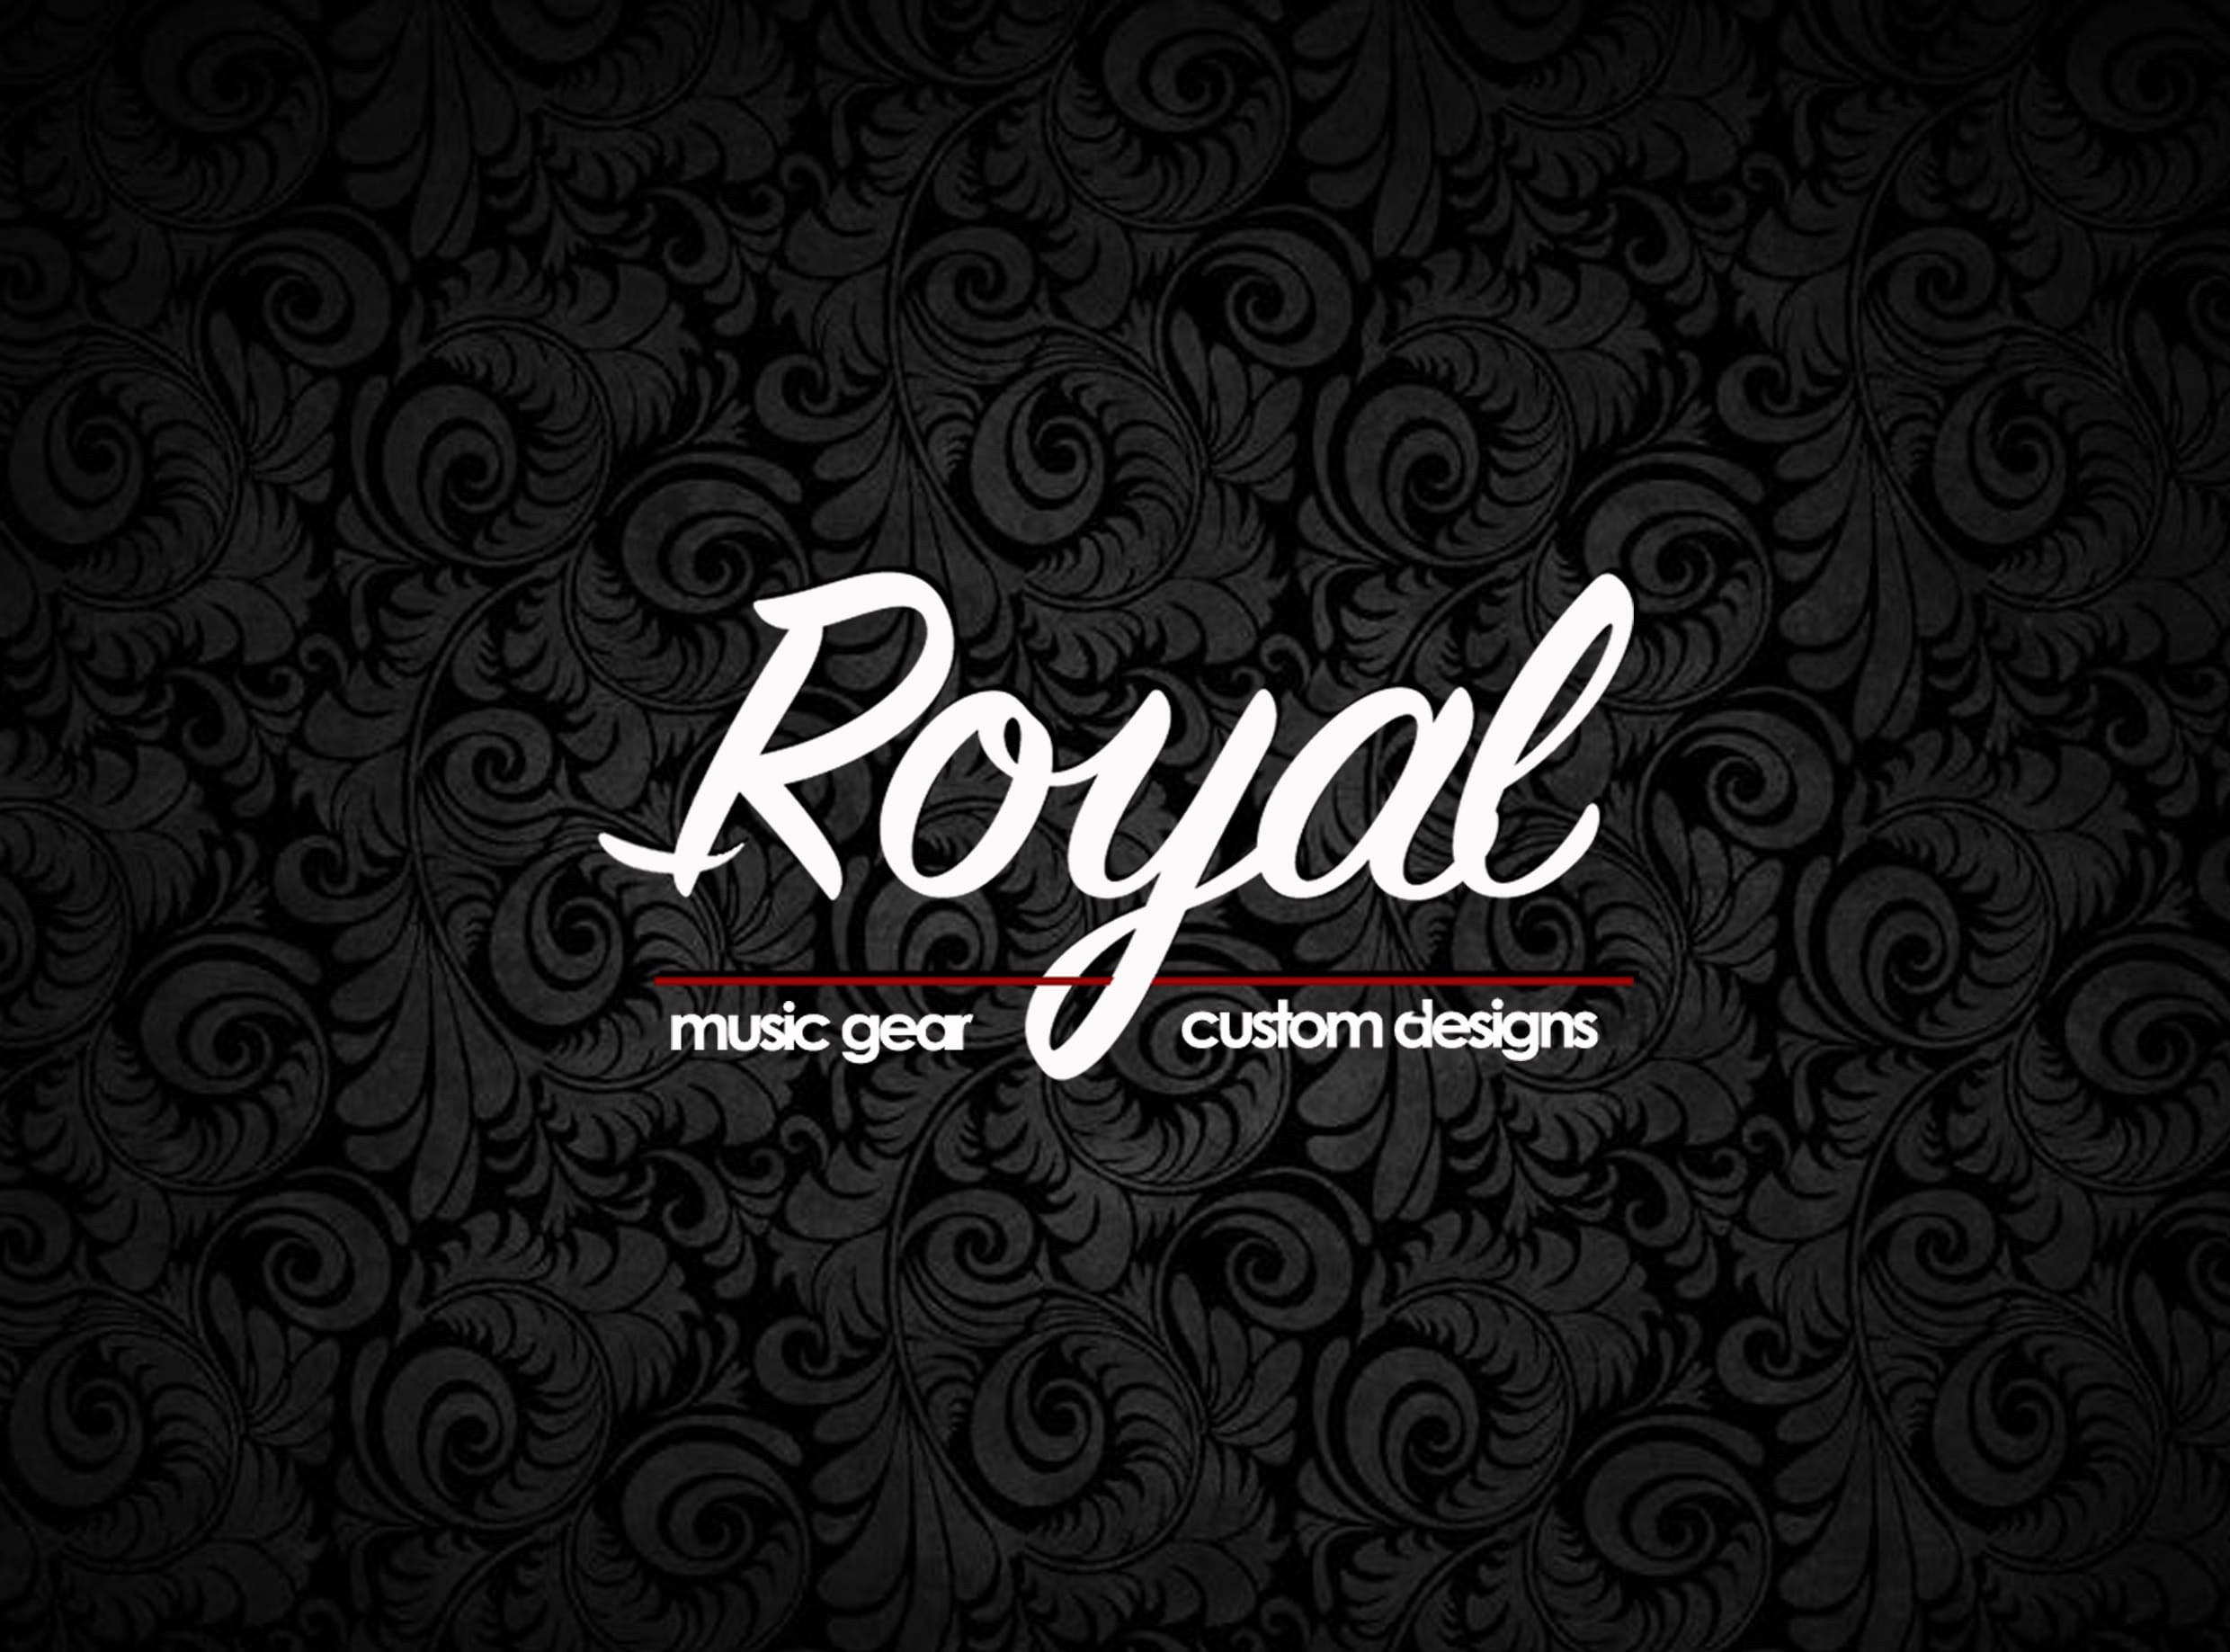 Royal Custom Designs & Music Gear